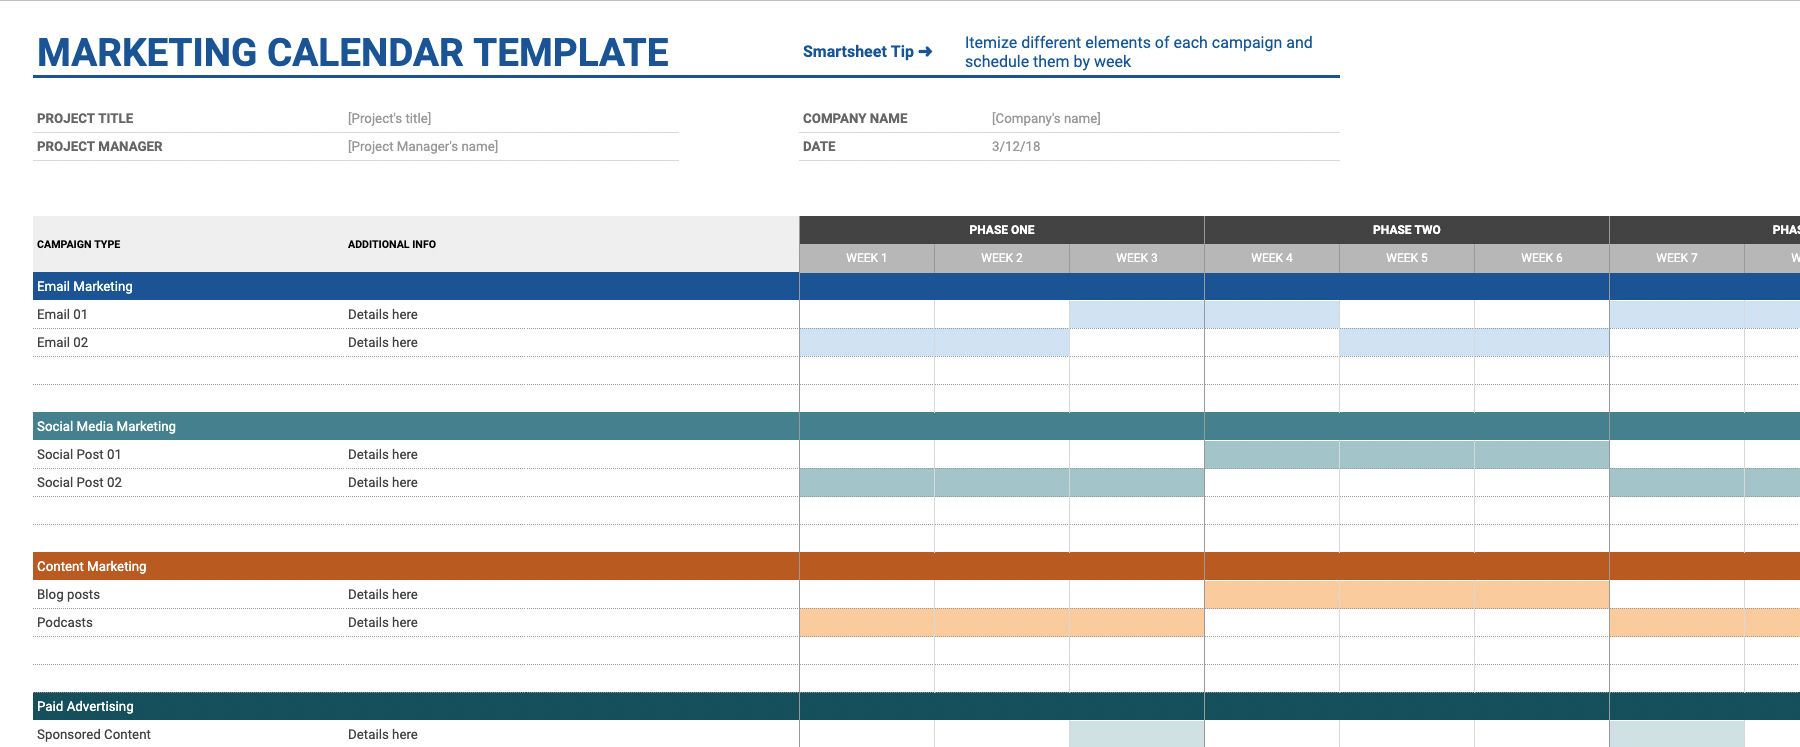 A screenshot of a Smartsheet marketing calendar in Google Sheets